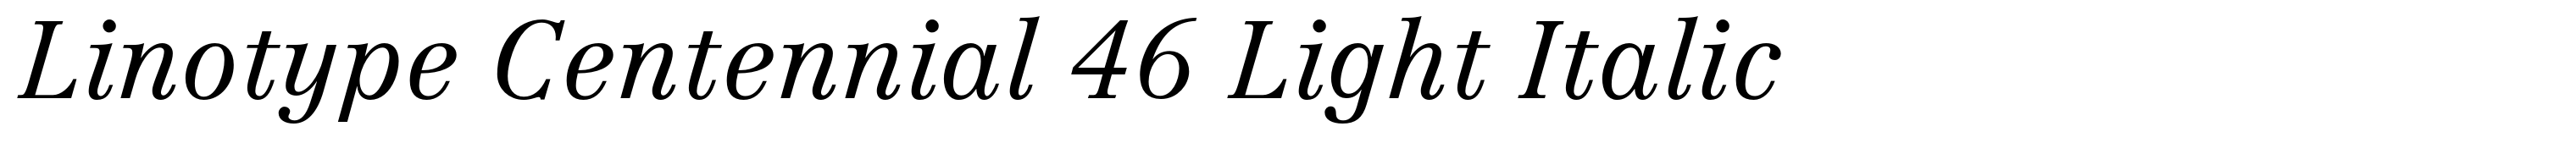 Linotype Centennial 46 Light Italic